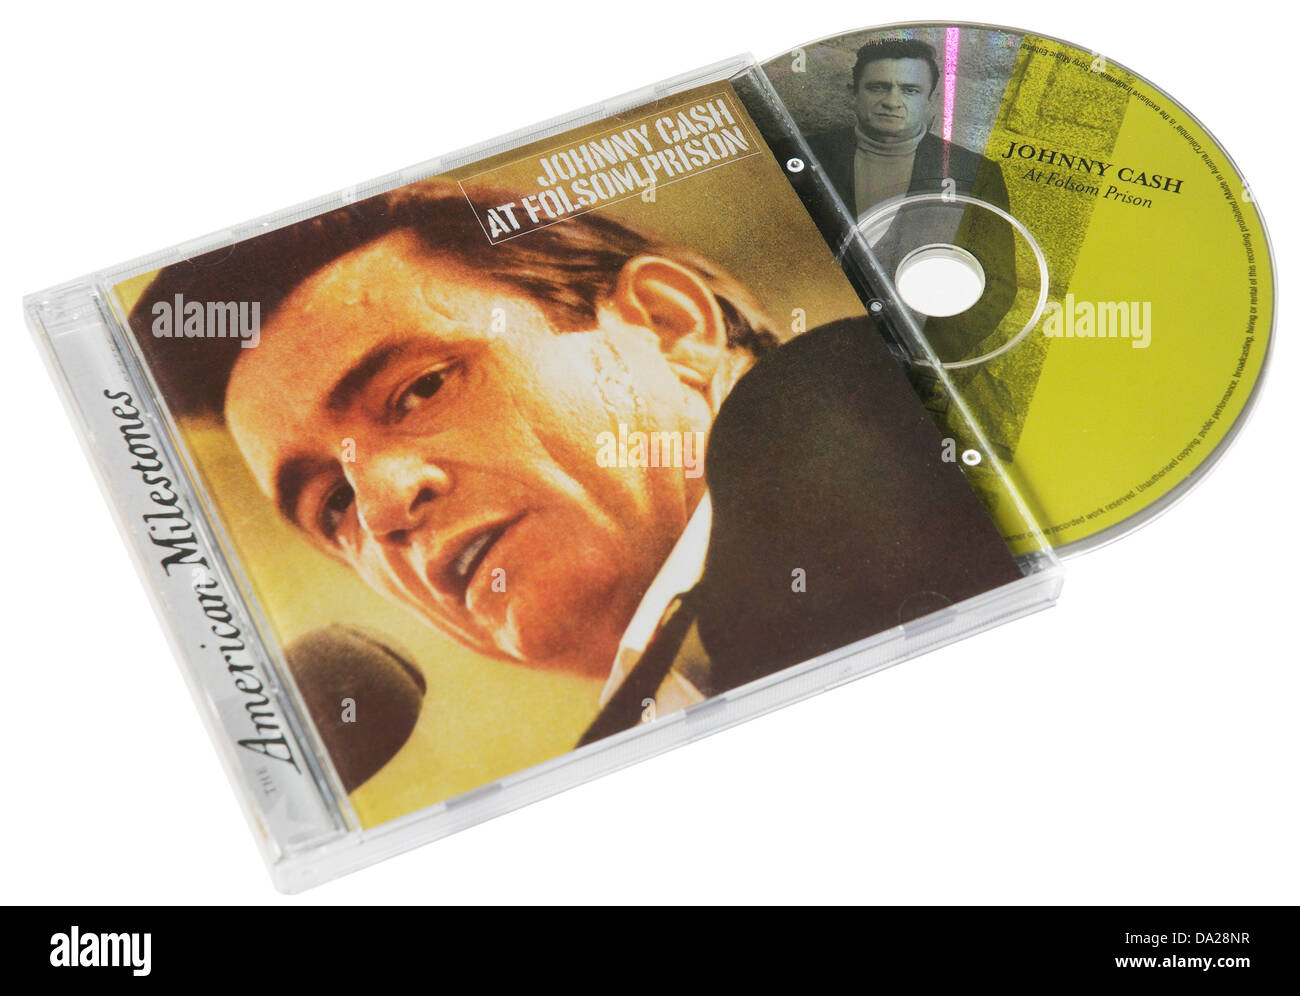 Johnny Cash Live At Folsom Prison album sur CD Banque D'Images